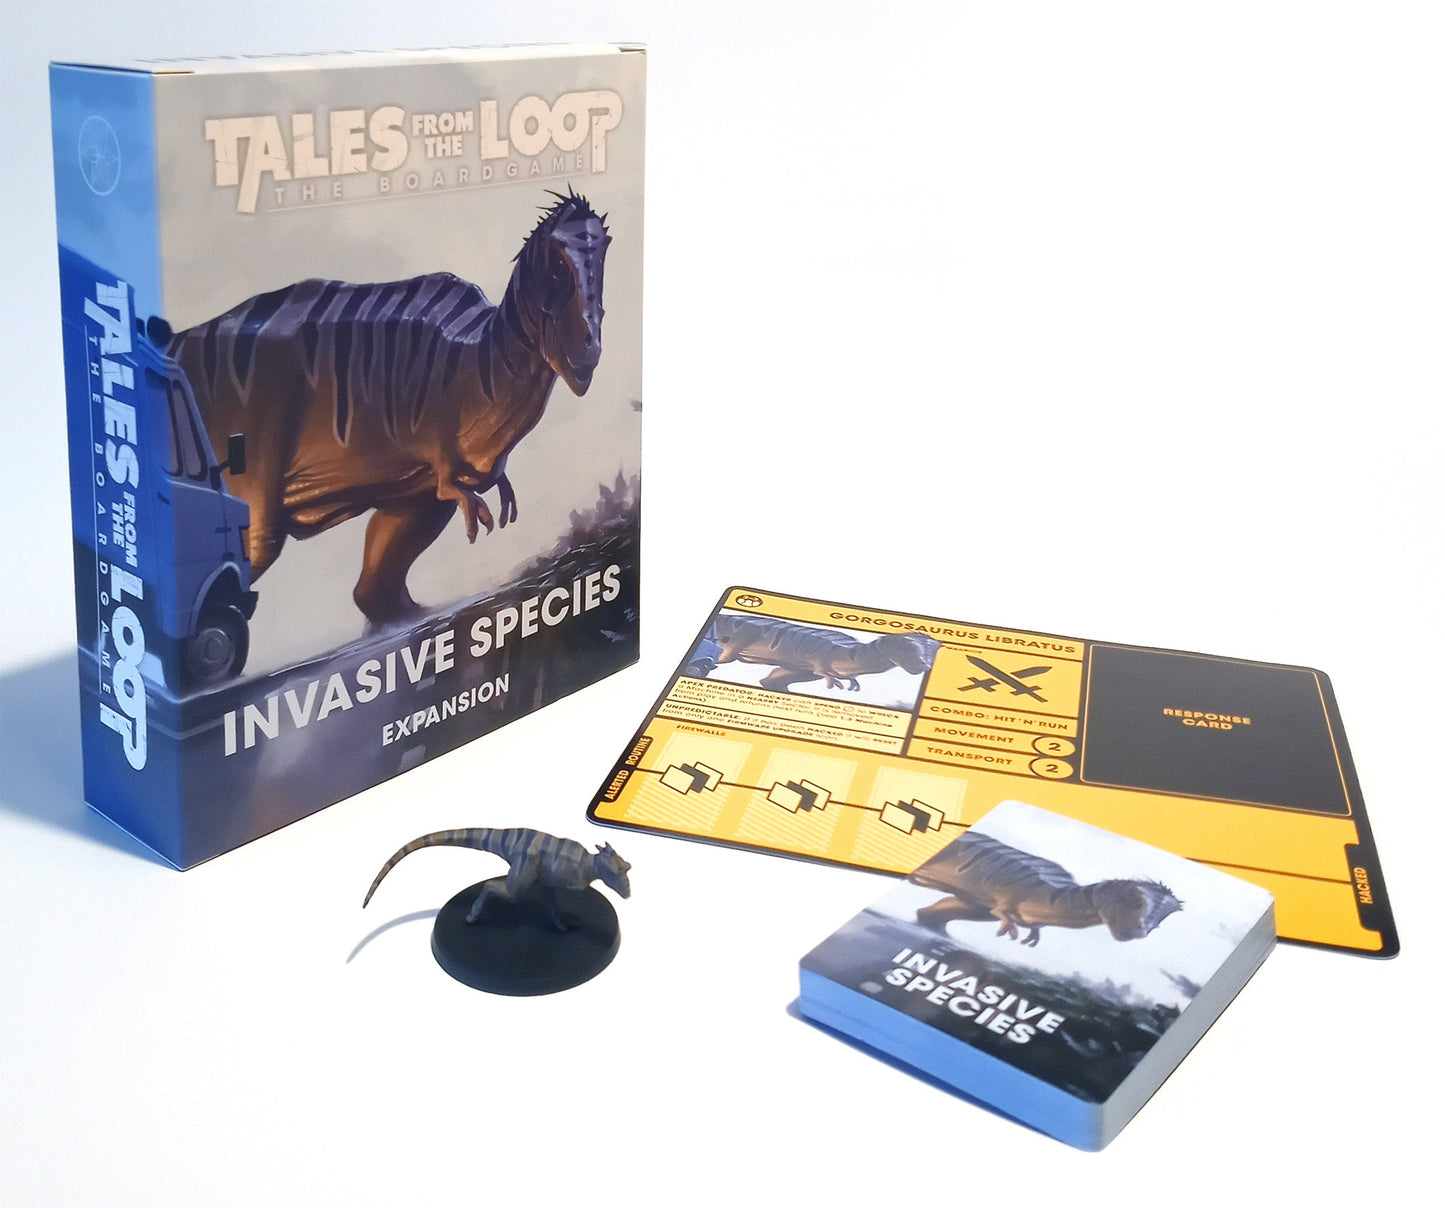 Tales From the Loop The Board Game: Invasive Species Scenario